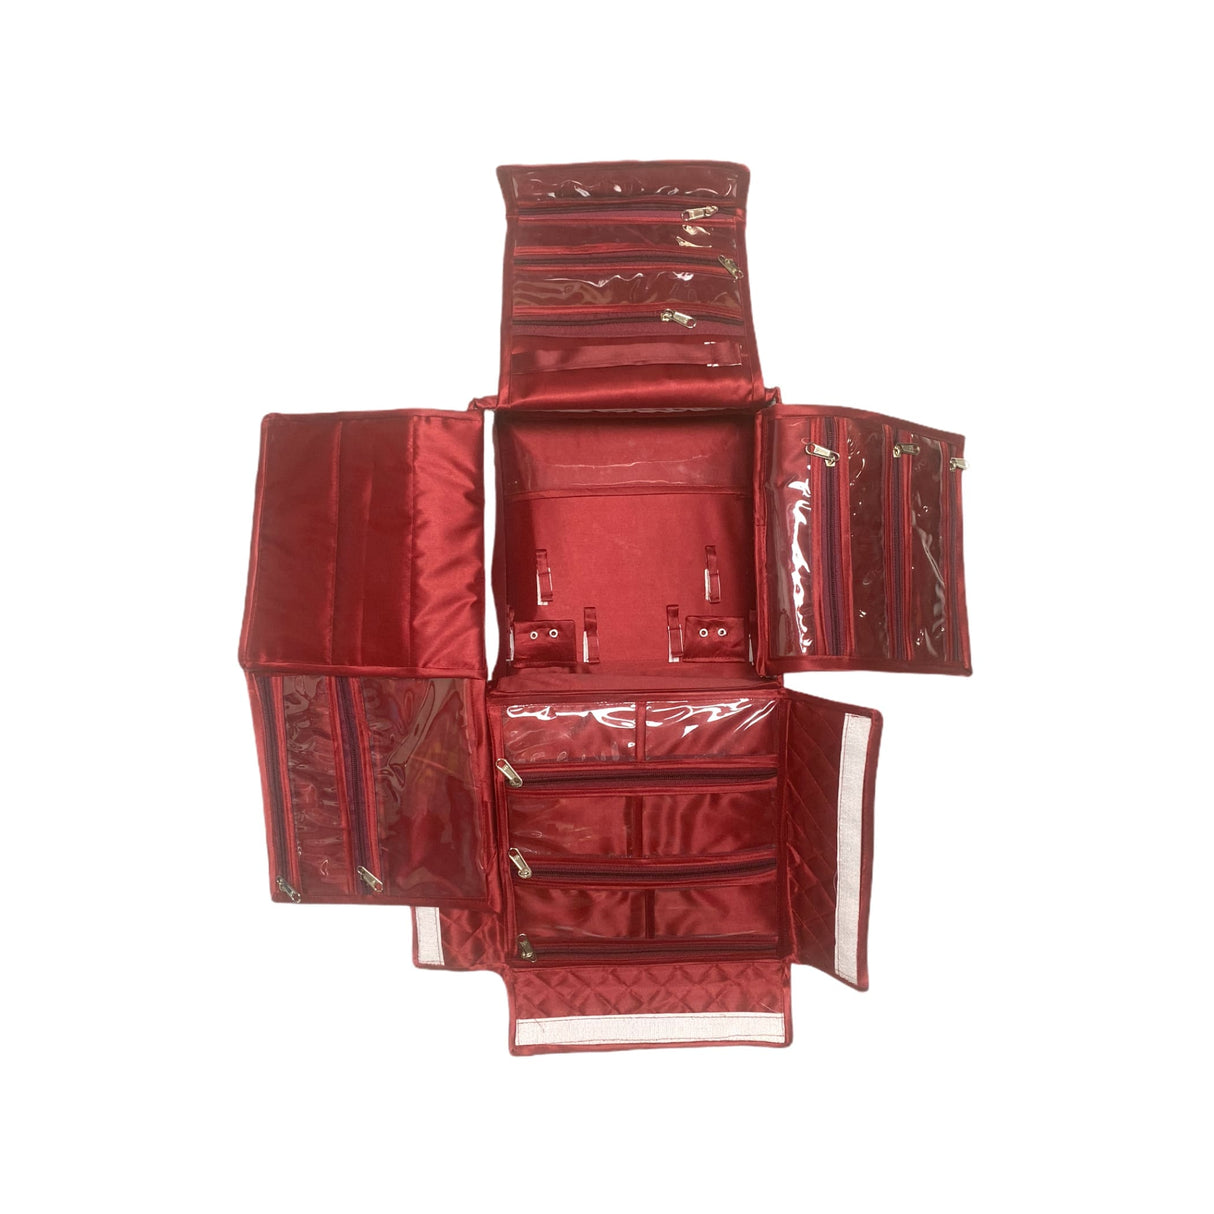 Handmade jewelry organizer foldable cloth bag travel kit